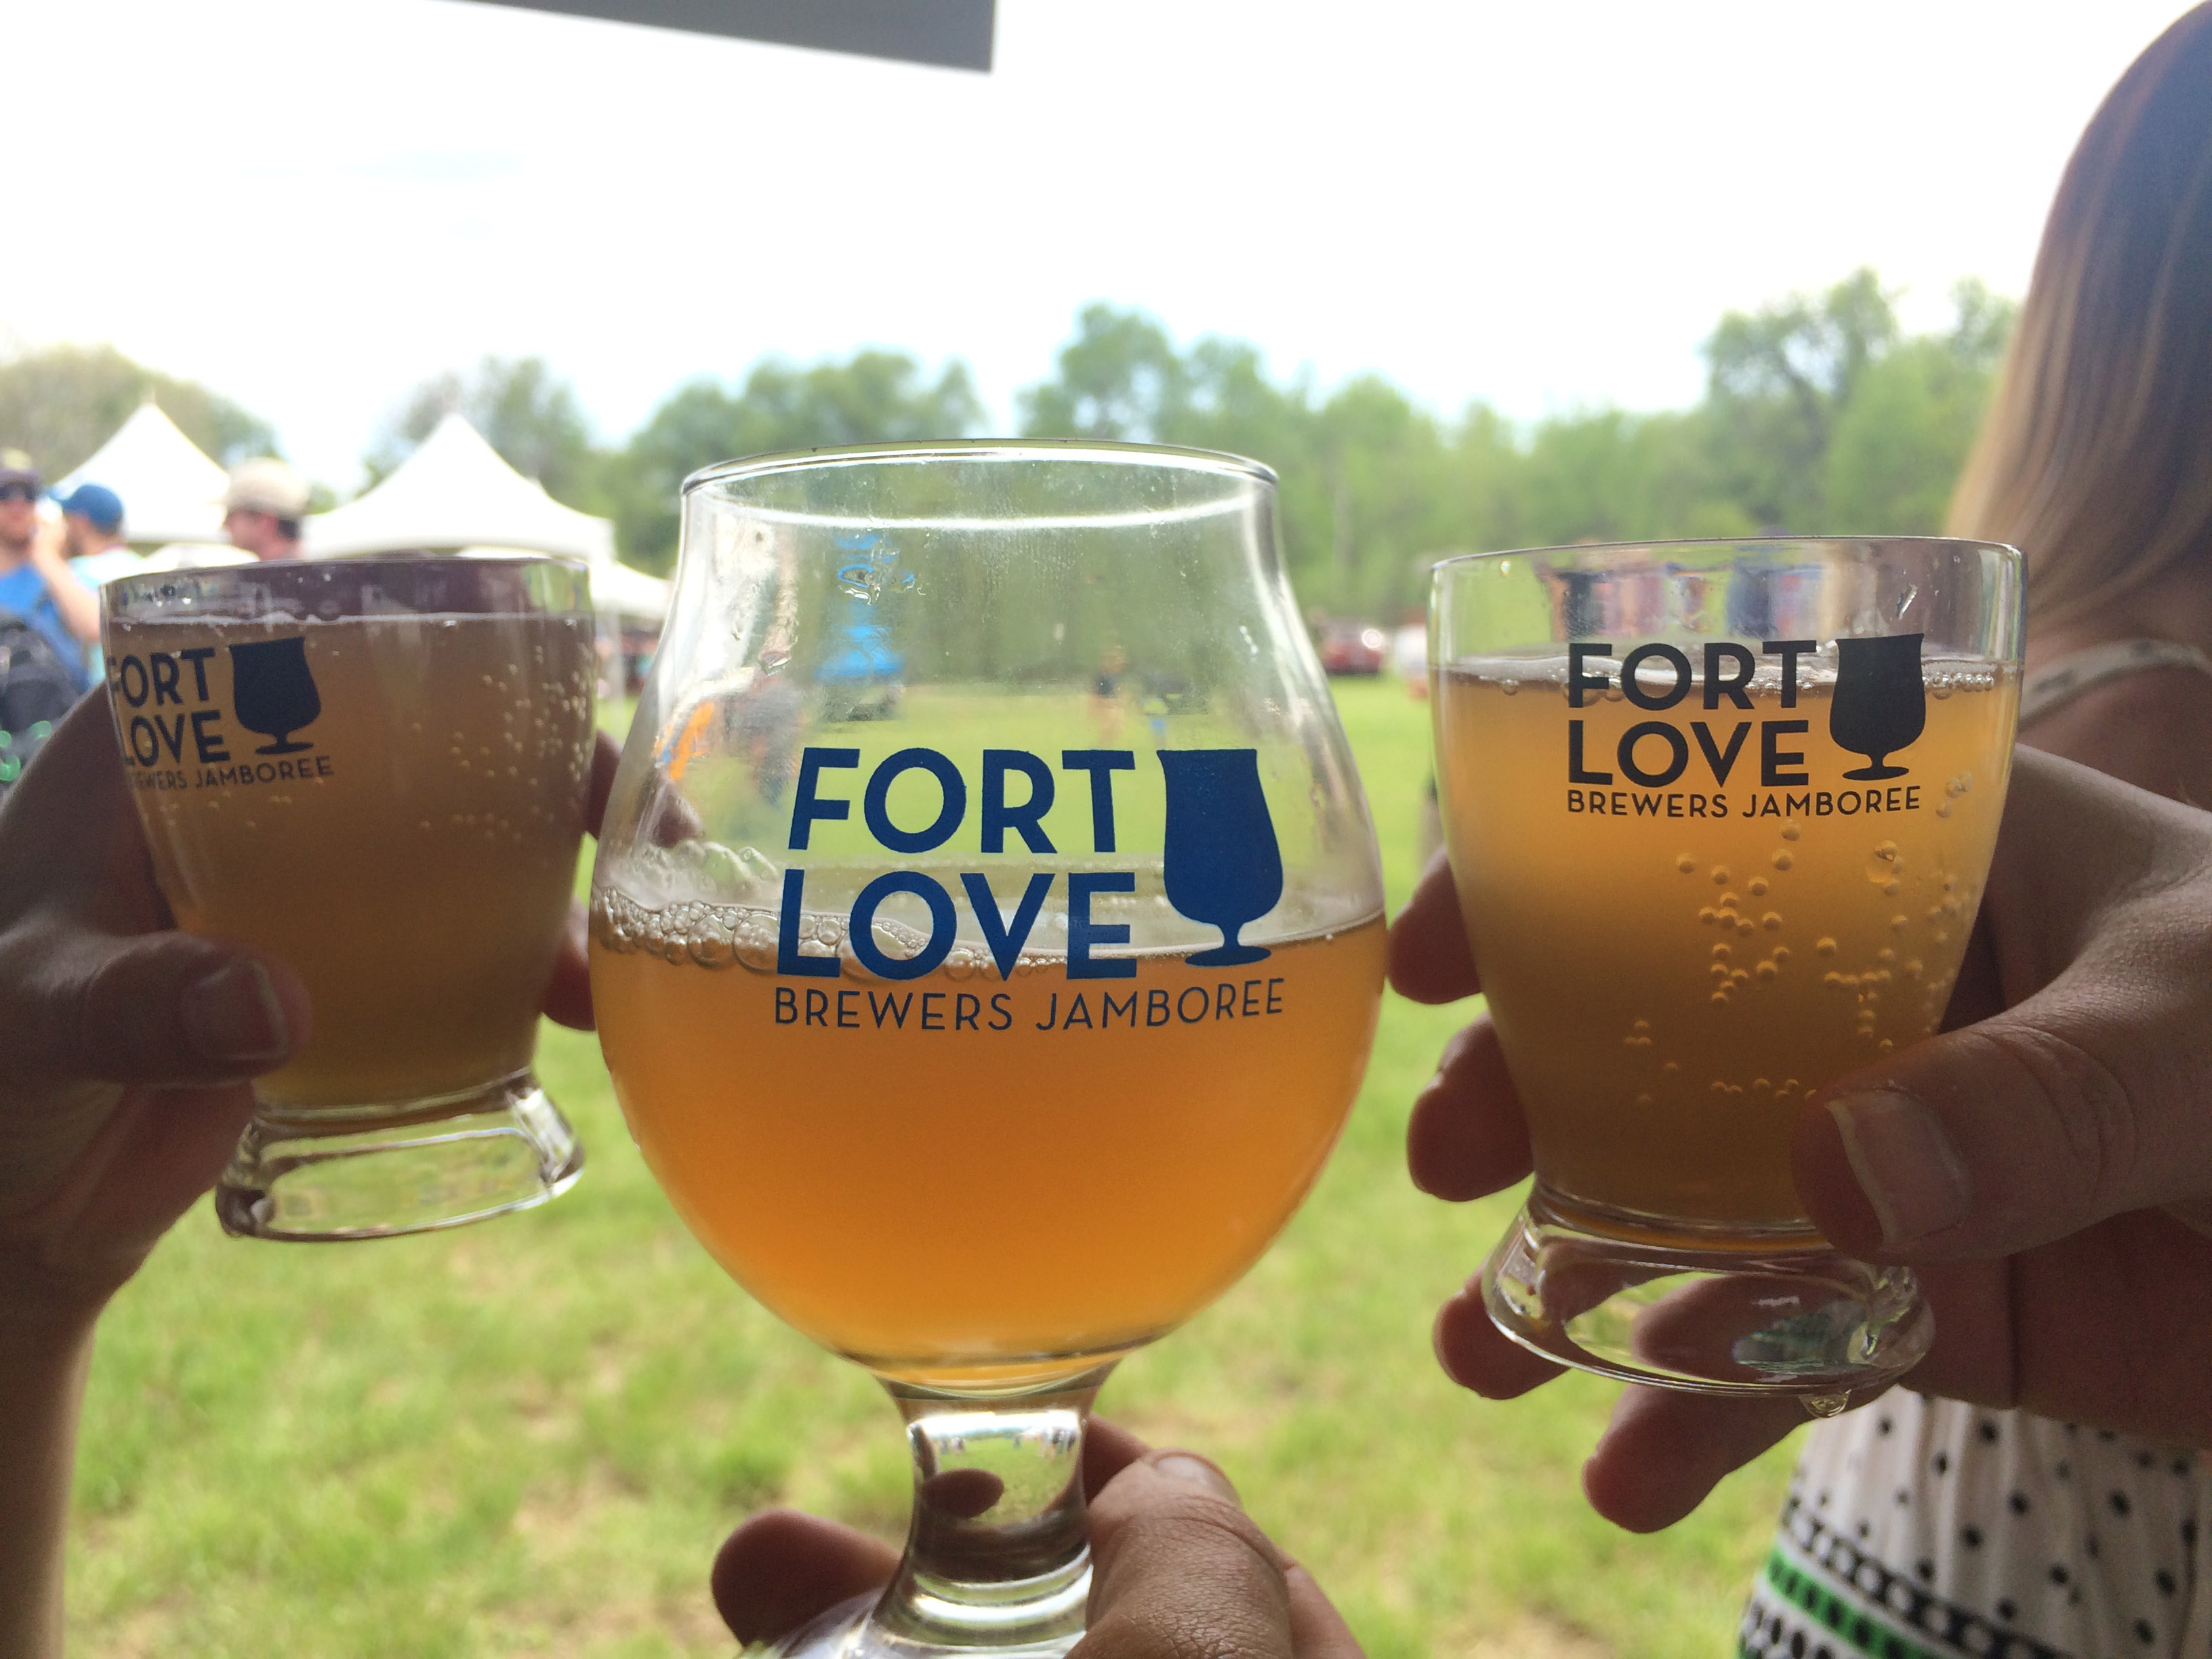 Fort Love Brewers Jamboree